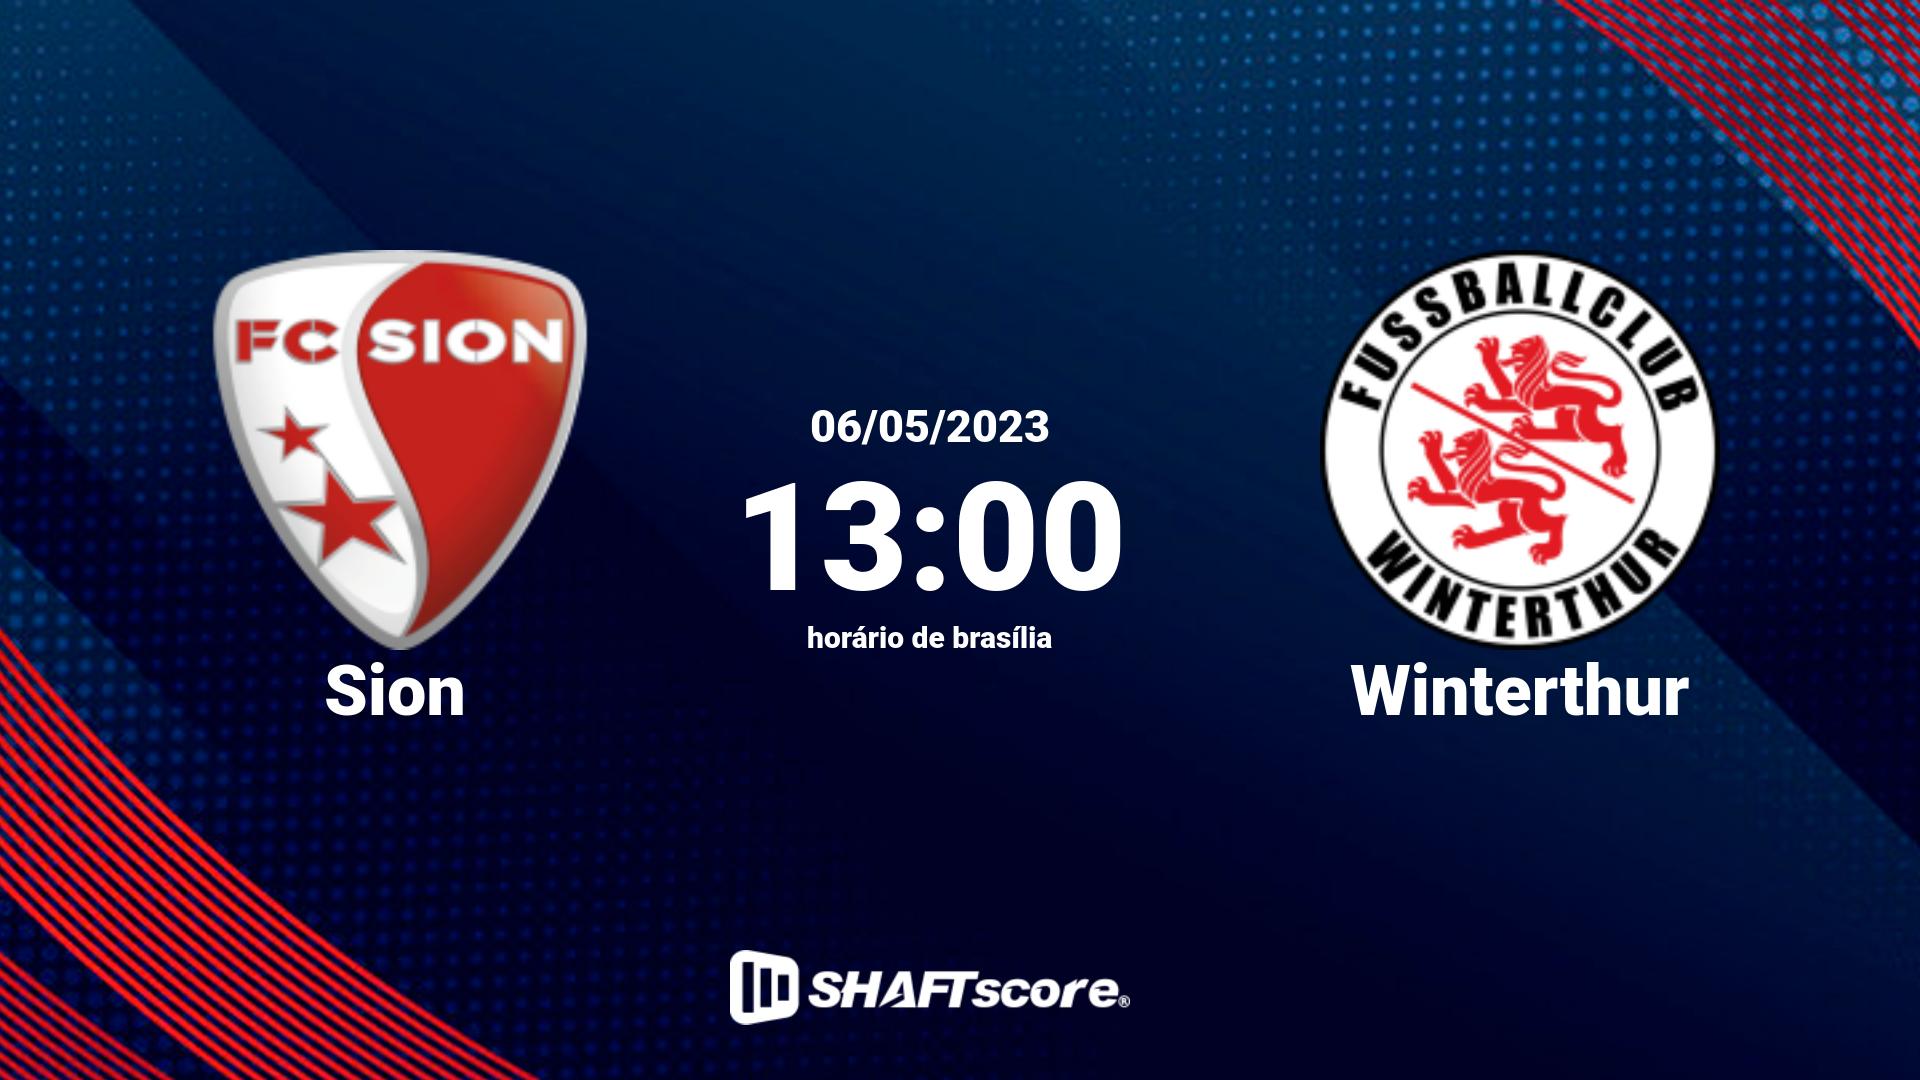 Estatísticas do jogo Sion vs Winterthur 06.05 13:00